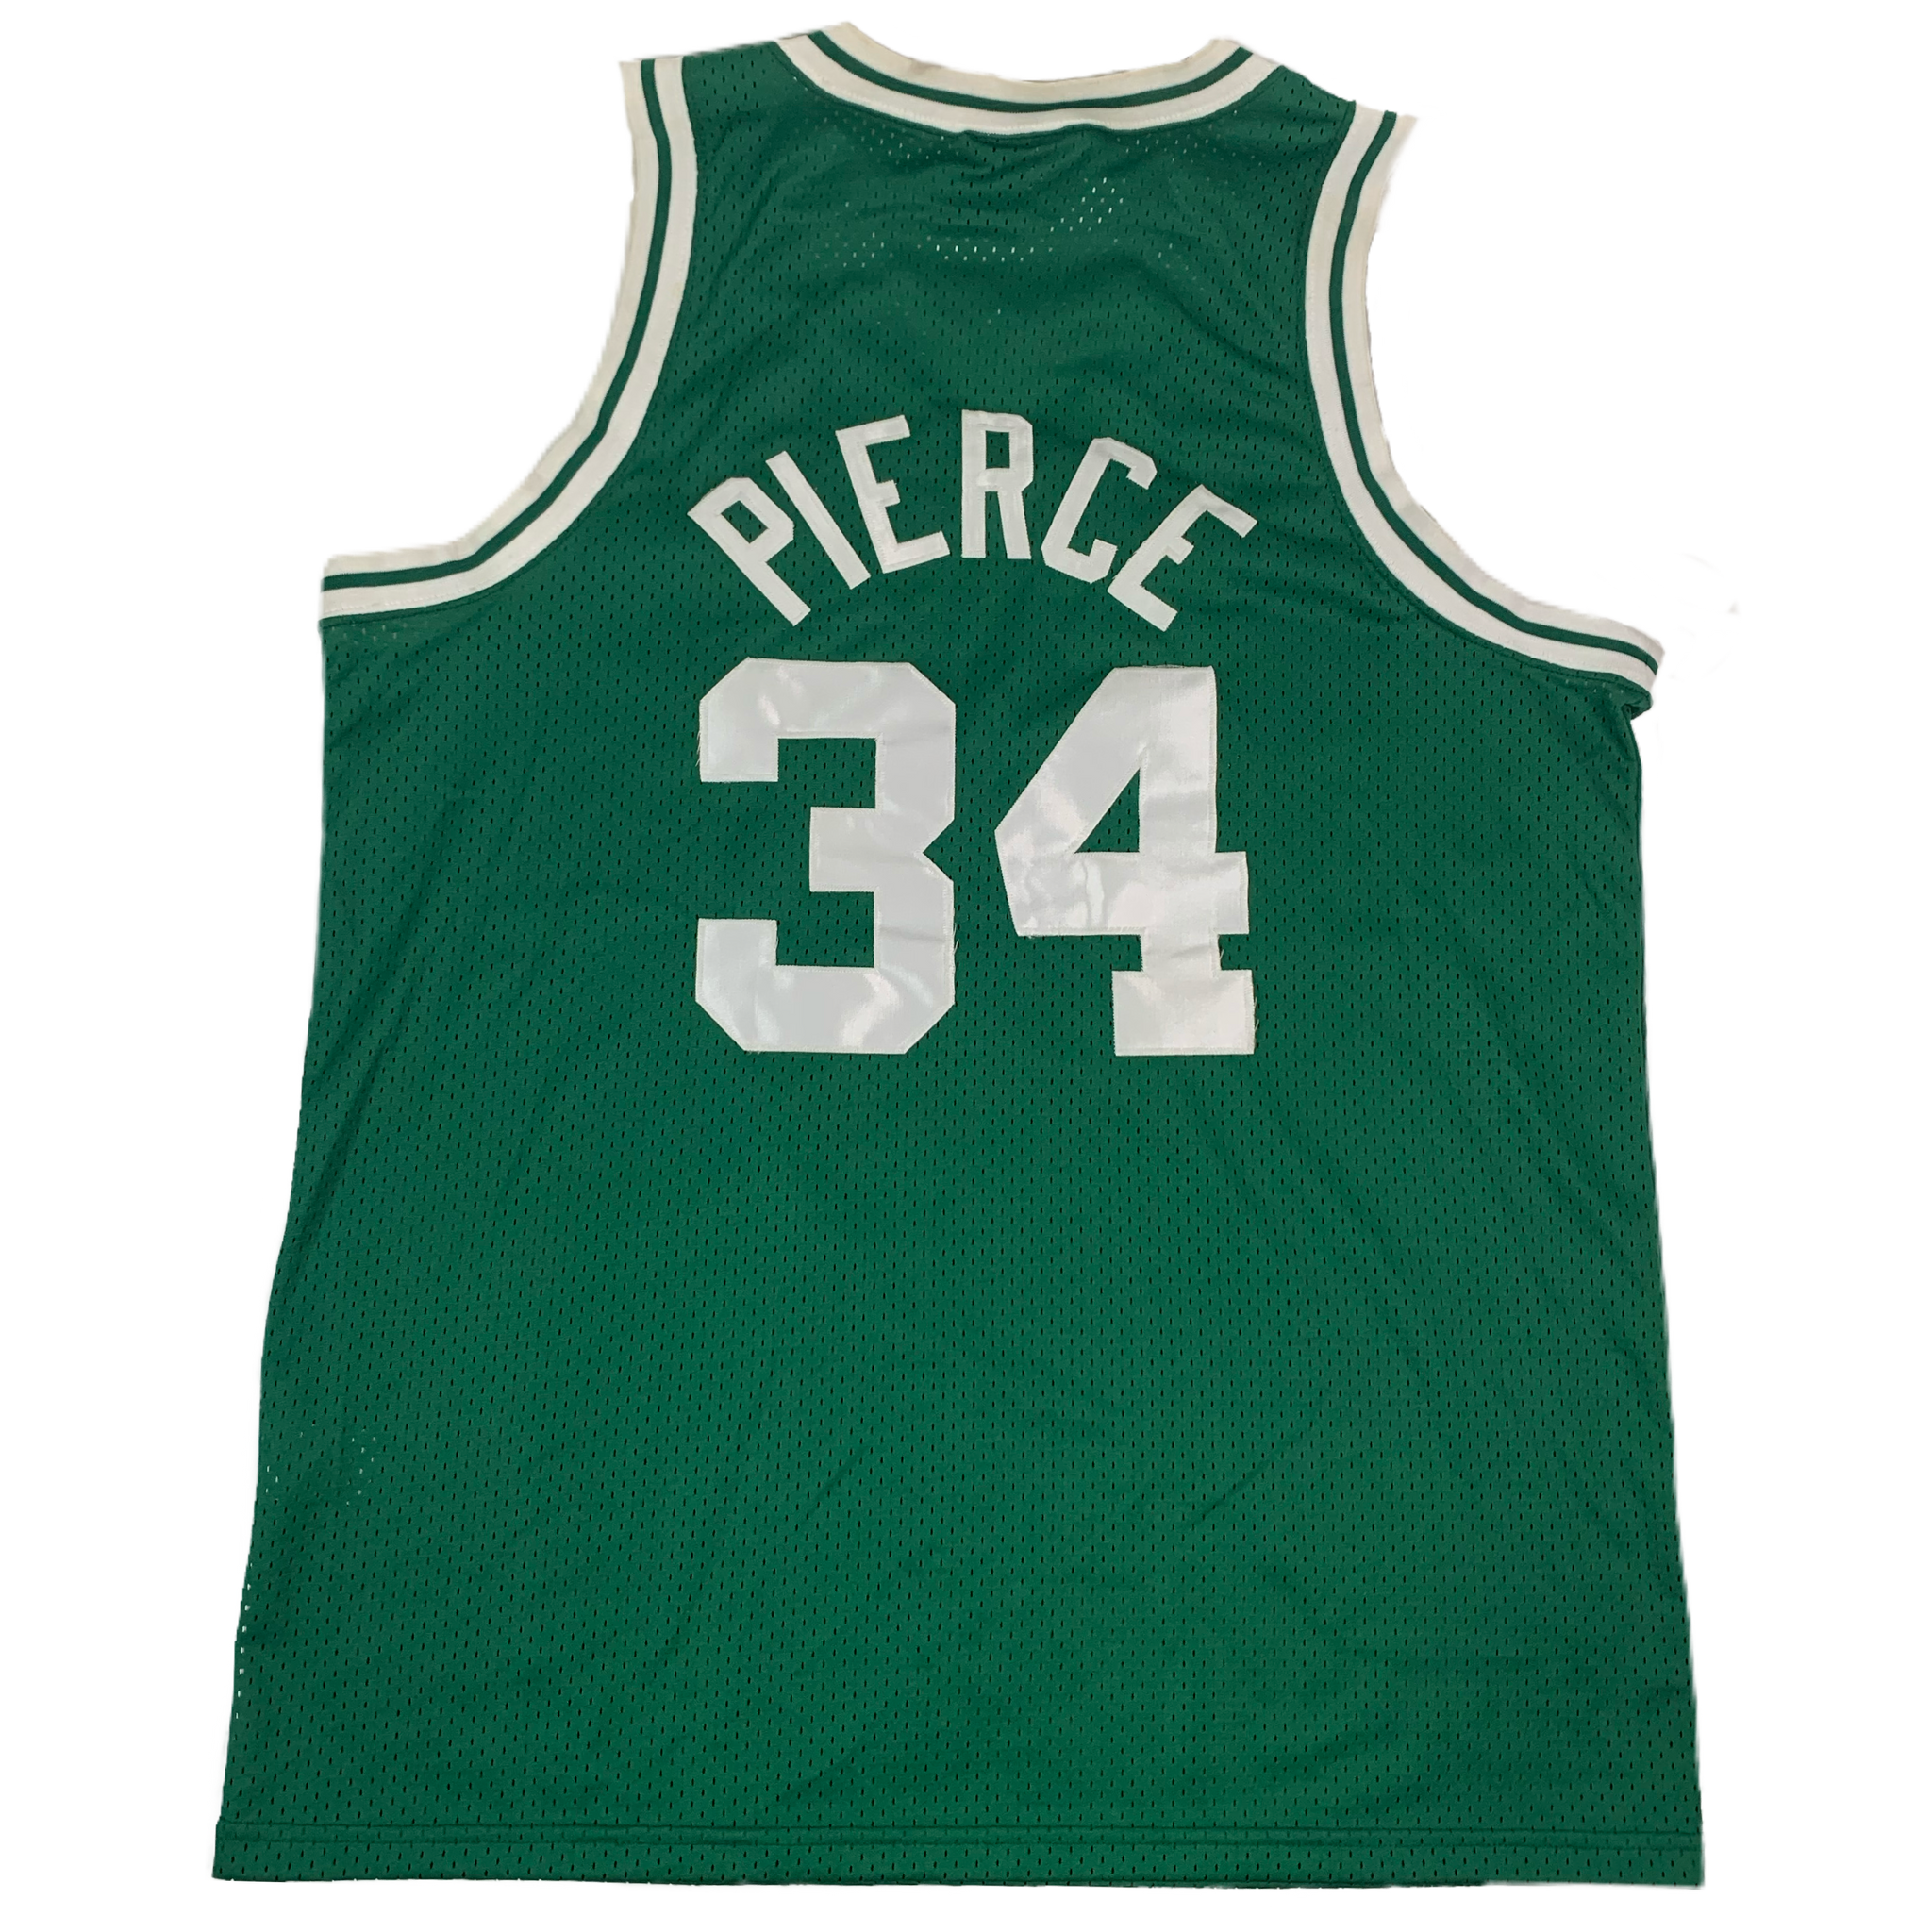 Boston Basketball Retired Numbers T Shirt